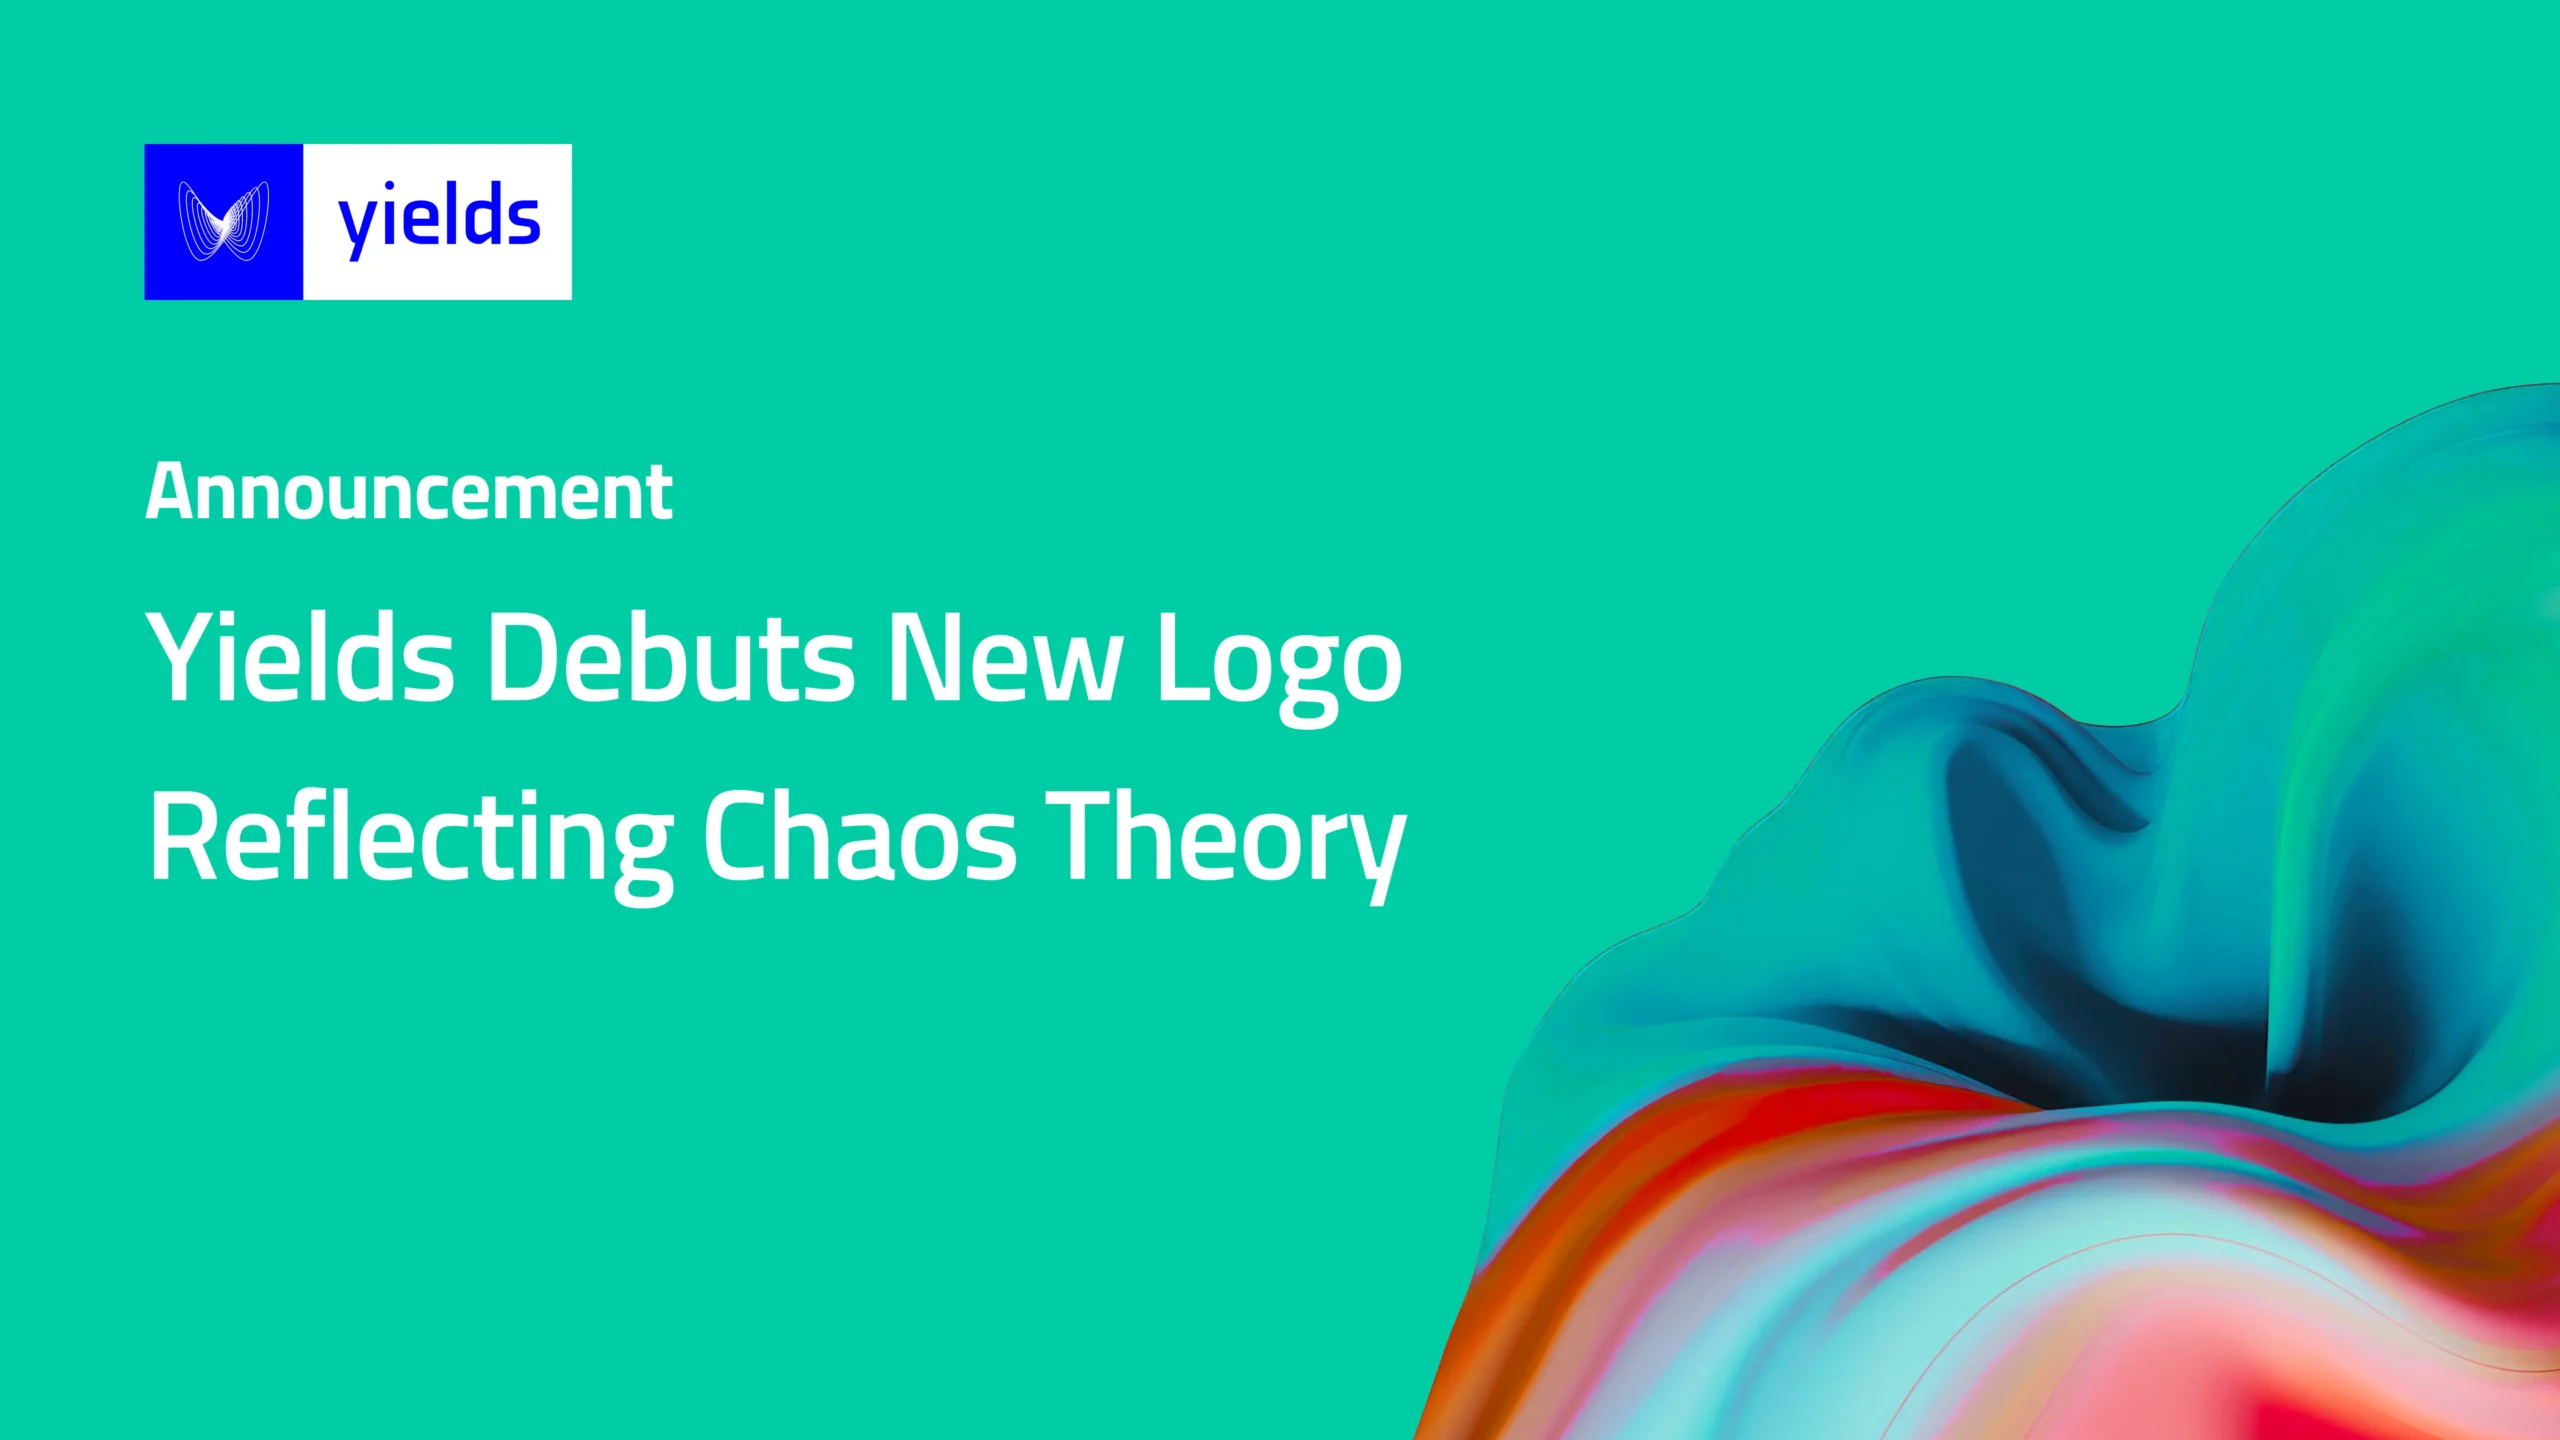 Yields Debuts New Logo Reflecting Chaos Theory